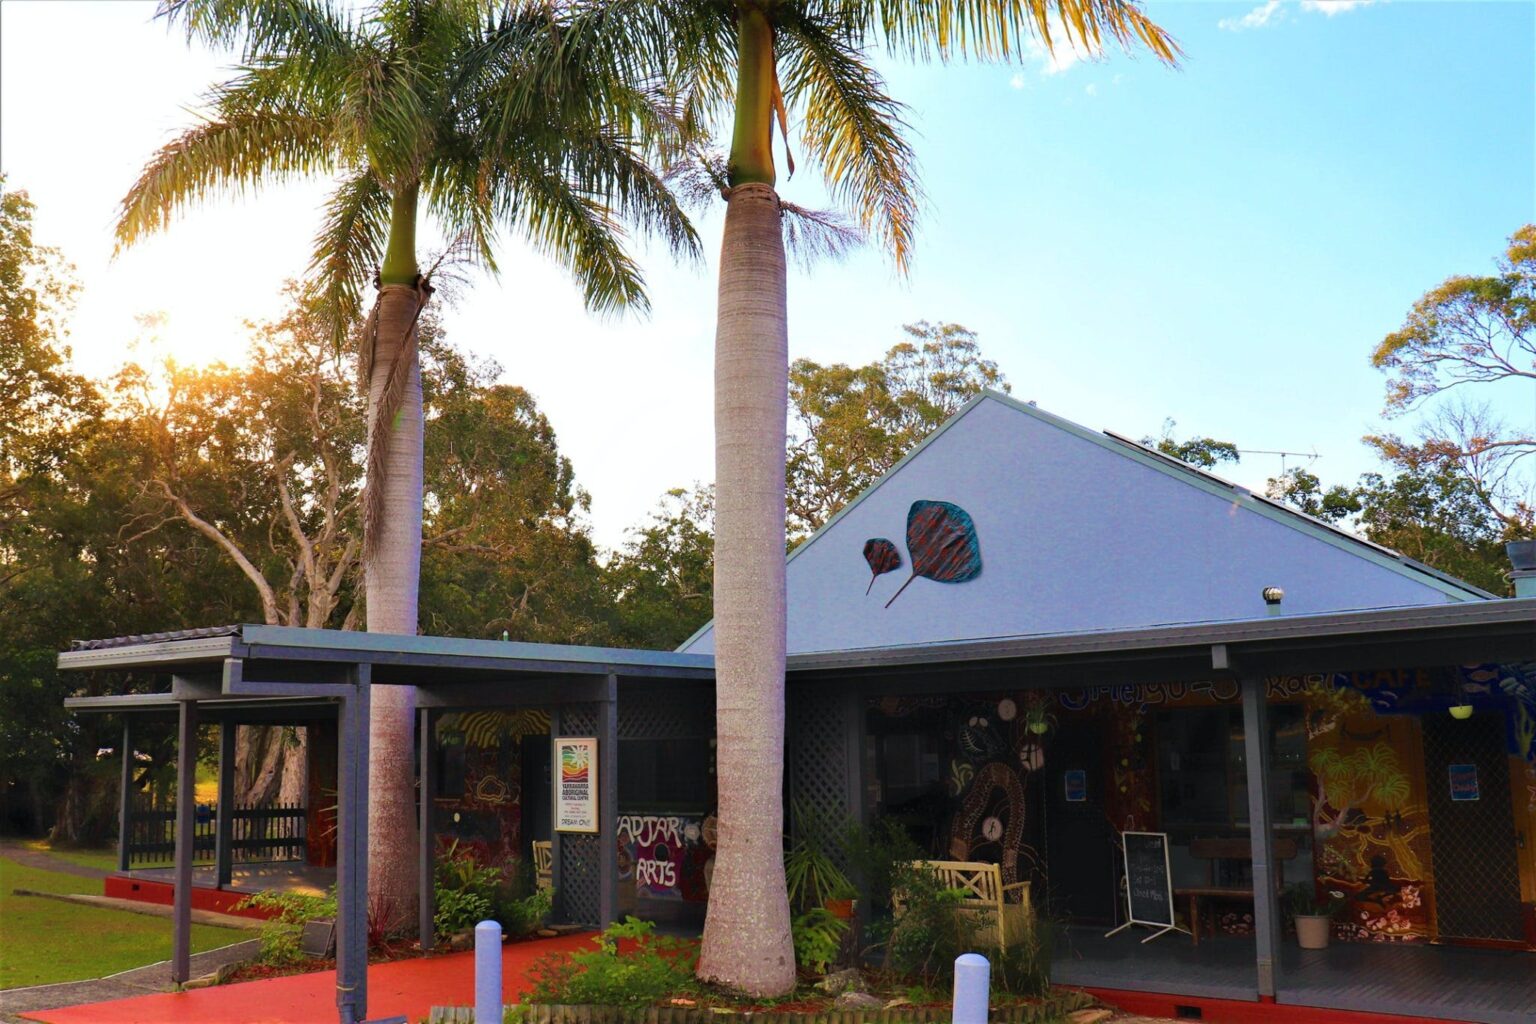 Yarrawarra aboriginal Cultural Centre